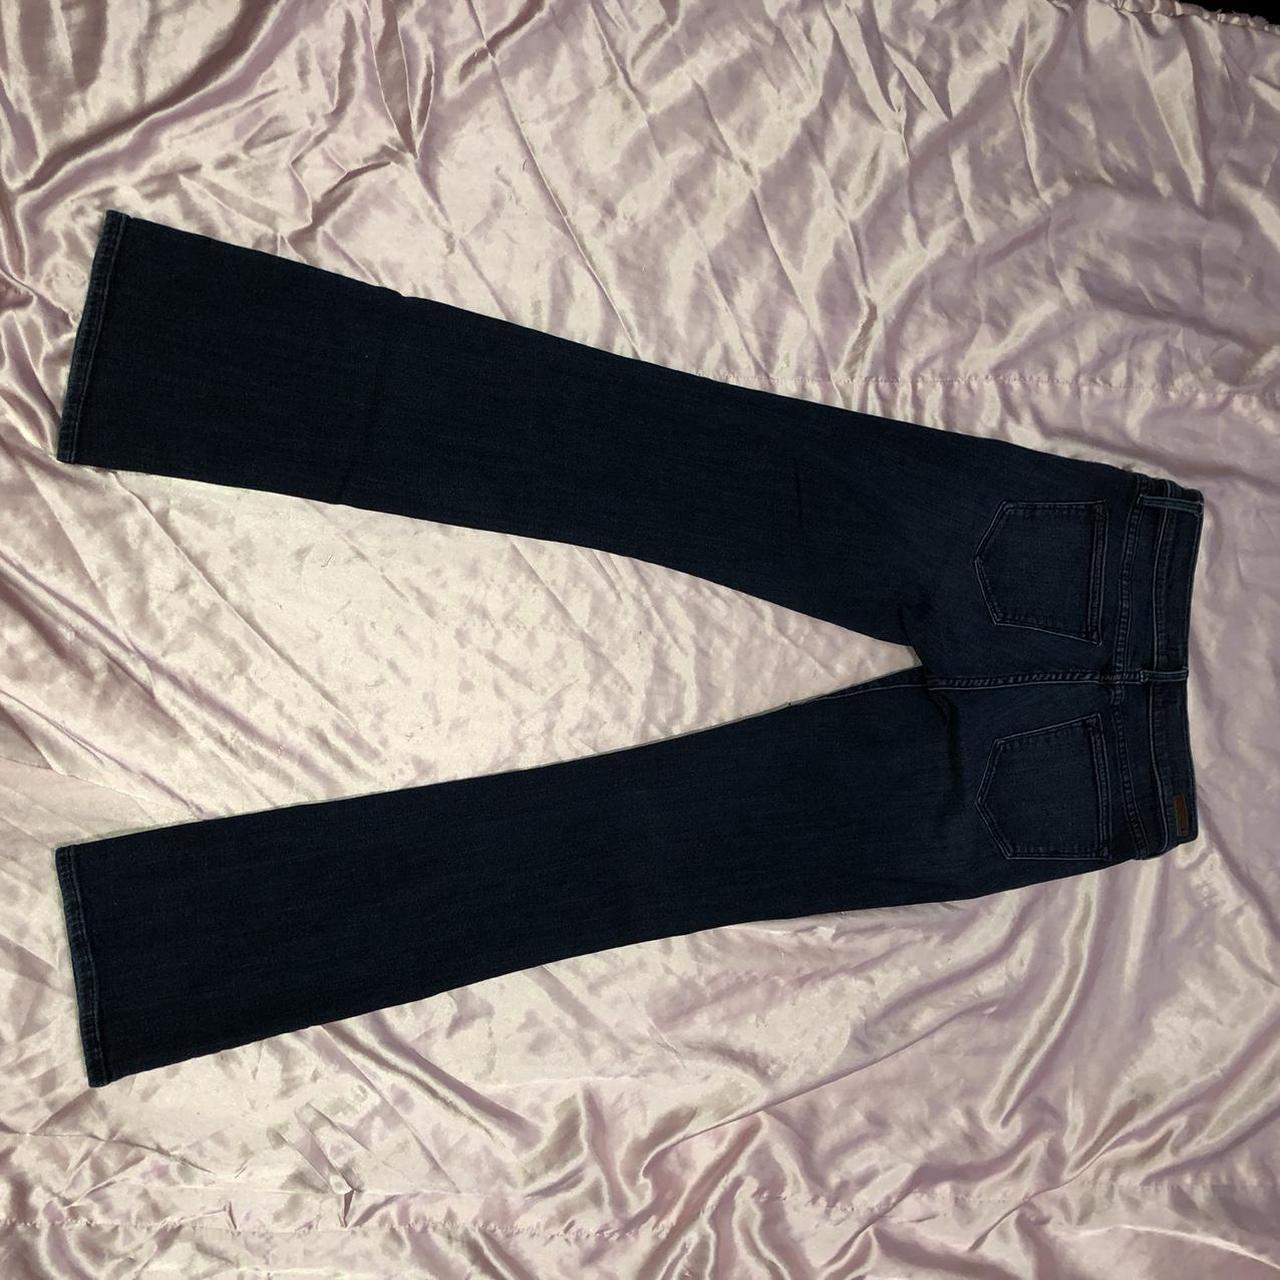 Product Image 3 - Principle Denim Innovators jeans

Principle Denim